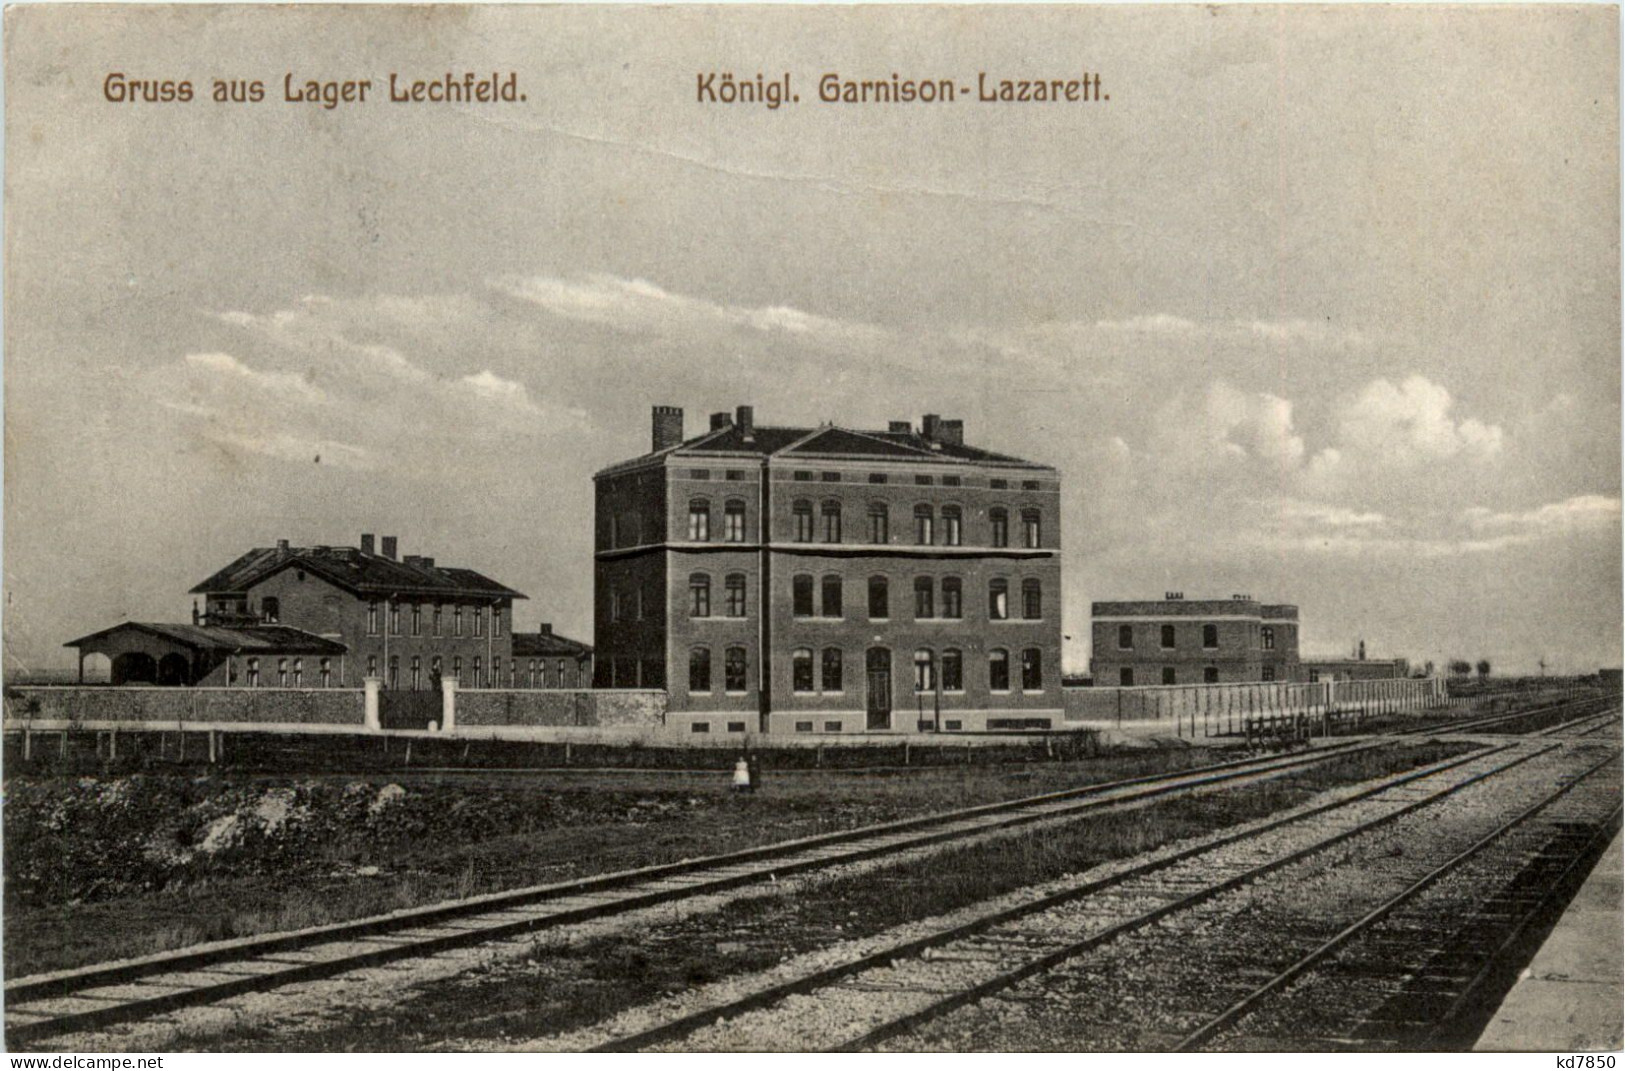 Lager-Lechfeld, Grüsse, Königl. Garnison-Lazarett - Augsburg